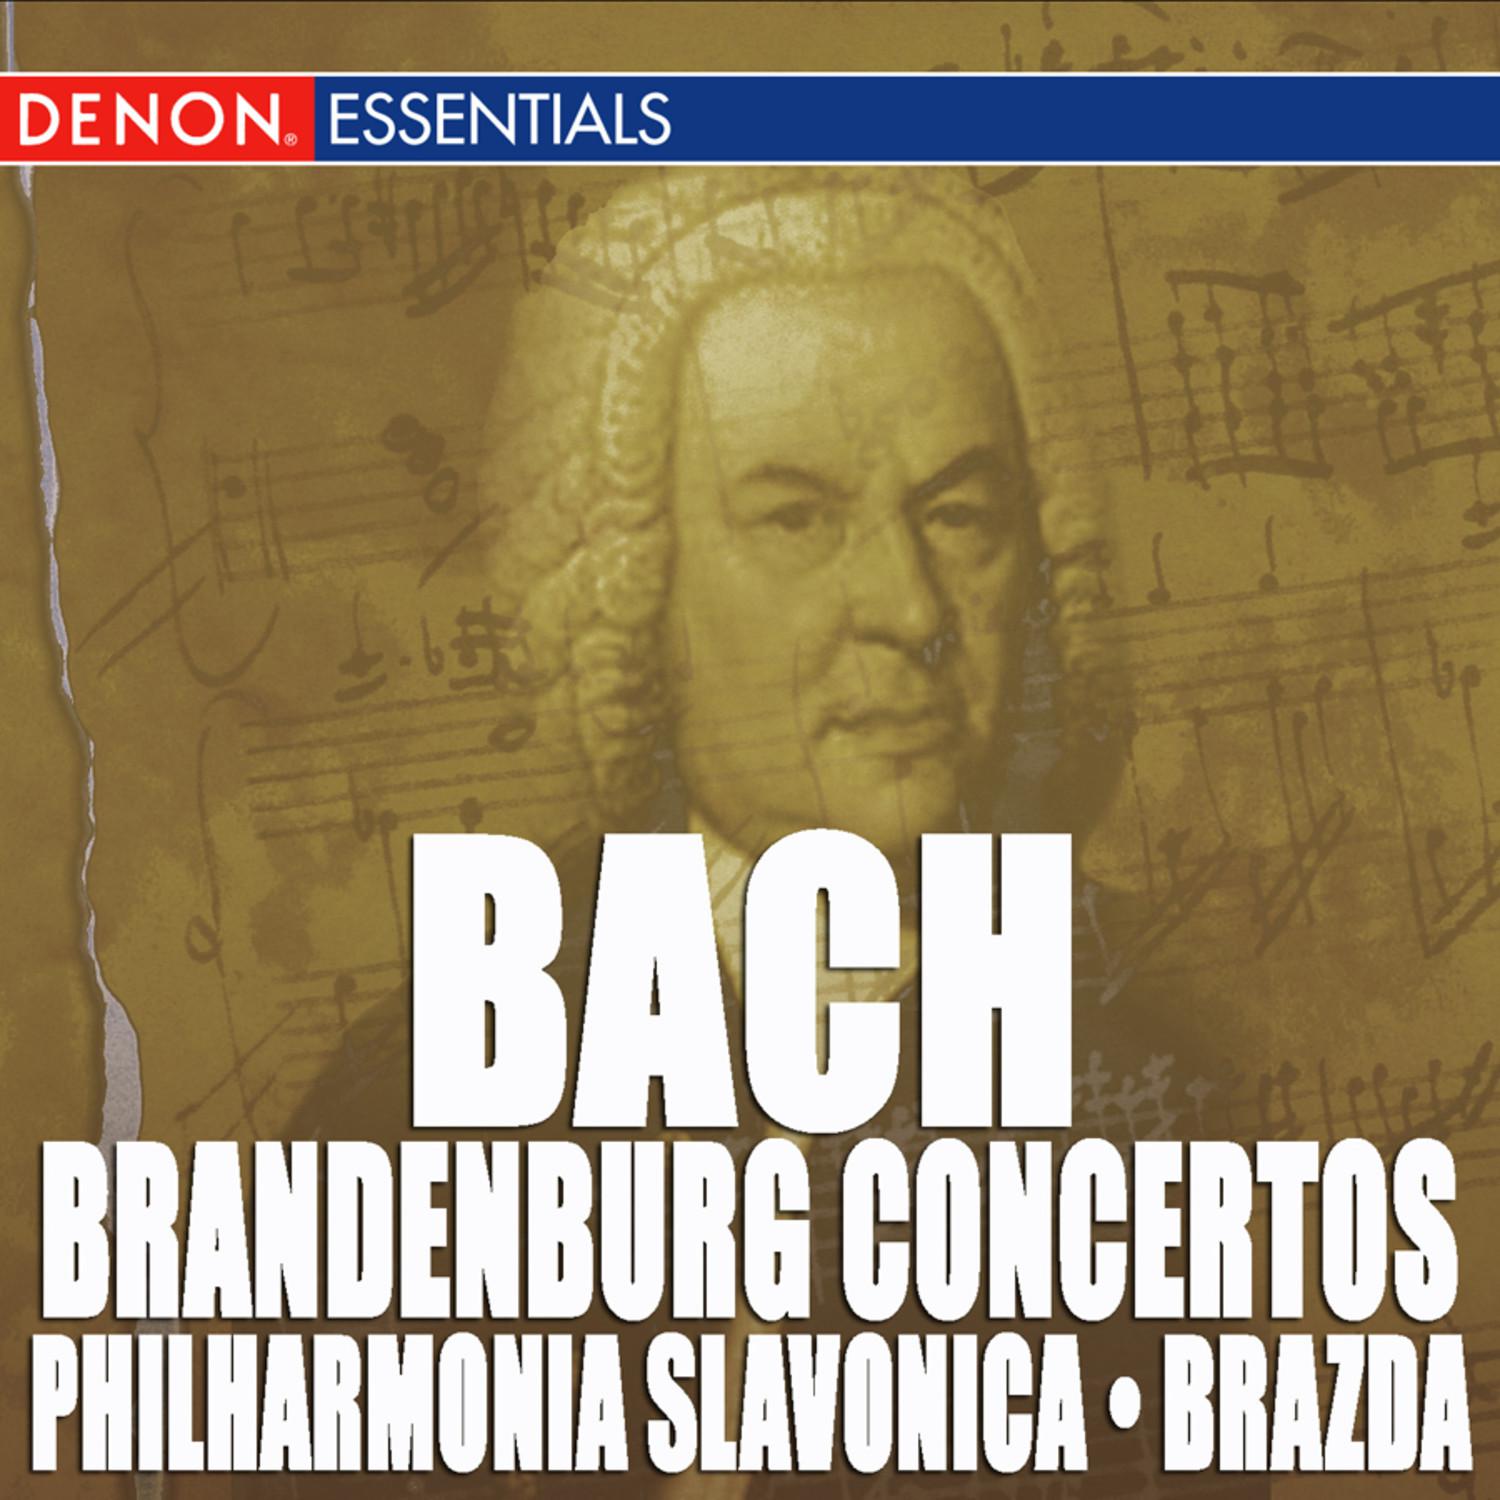 Brandenburg Concerto No. 1 in F Major, BWV 1046: IV. Menue - Trio - Polonaise